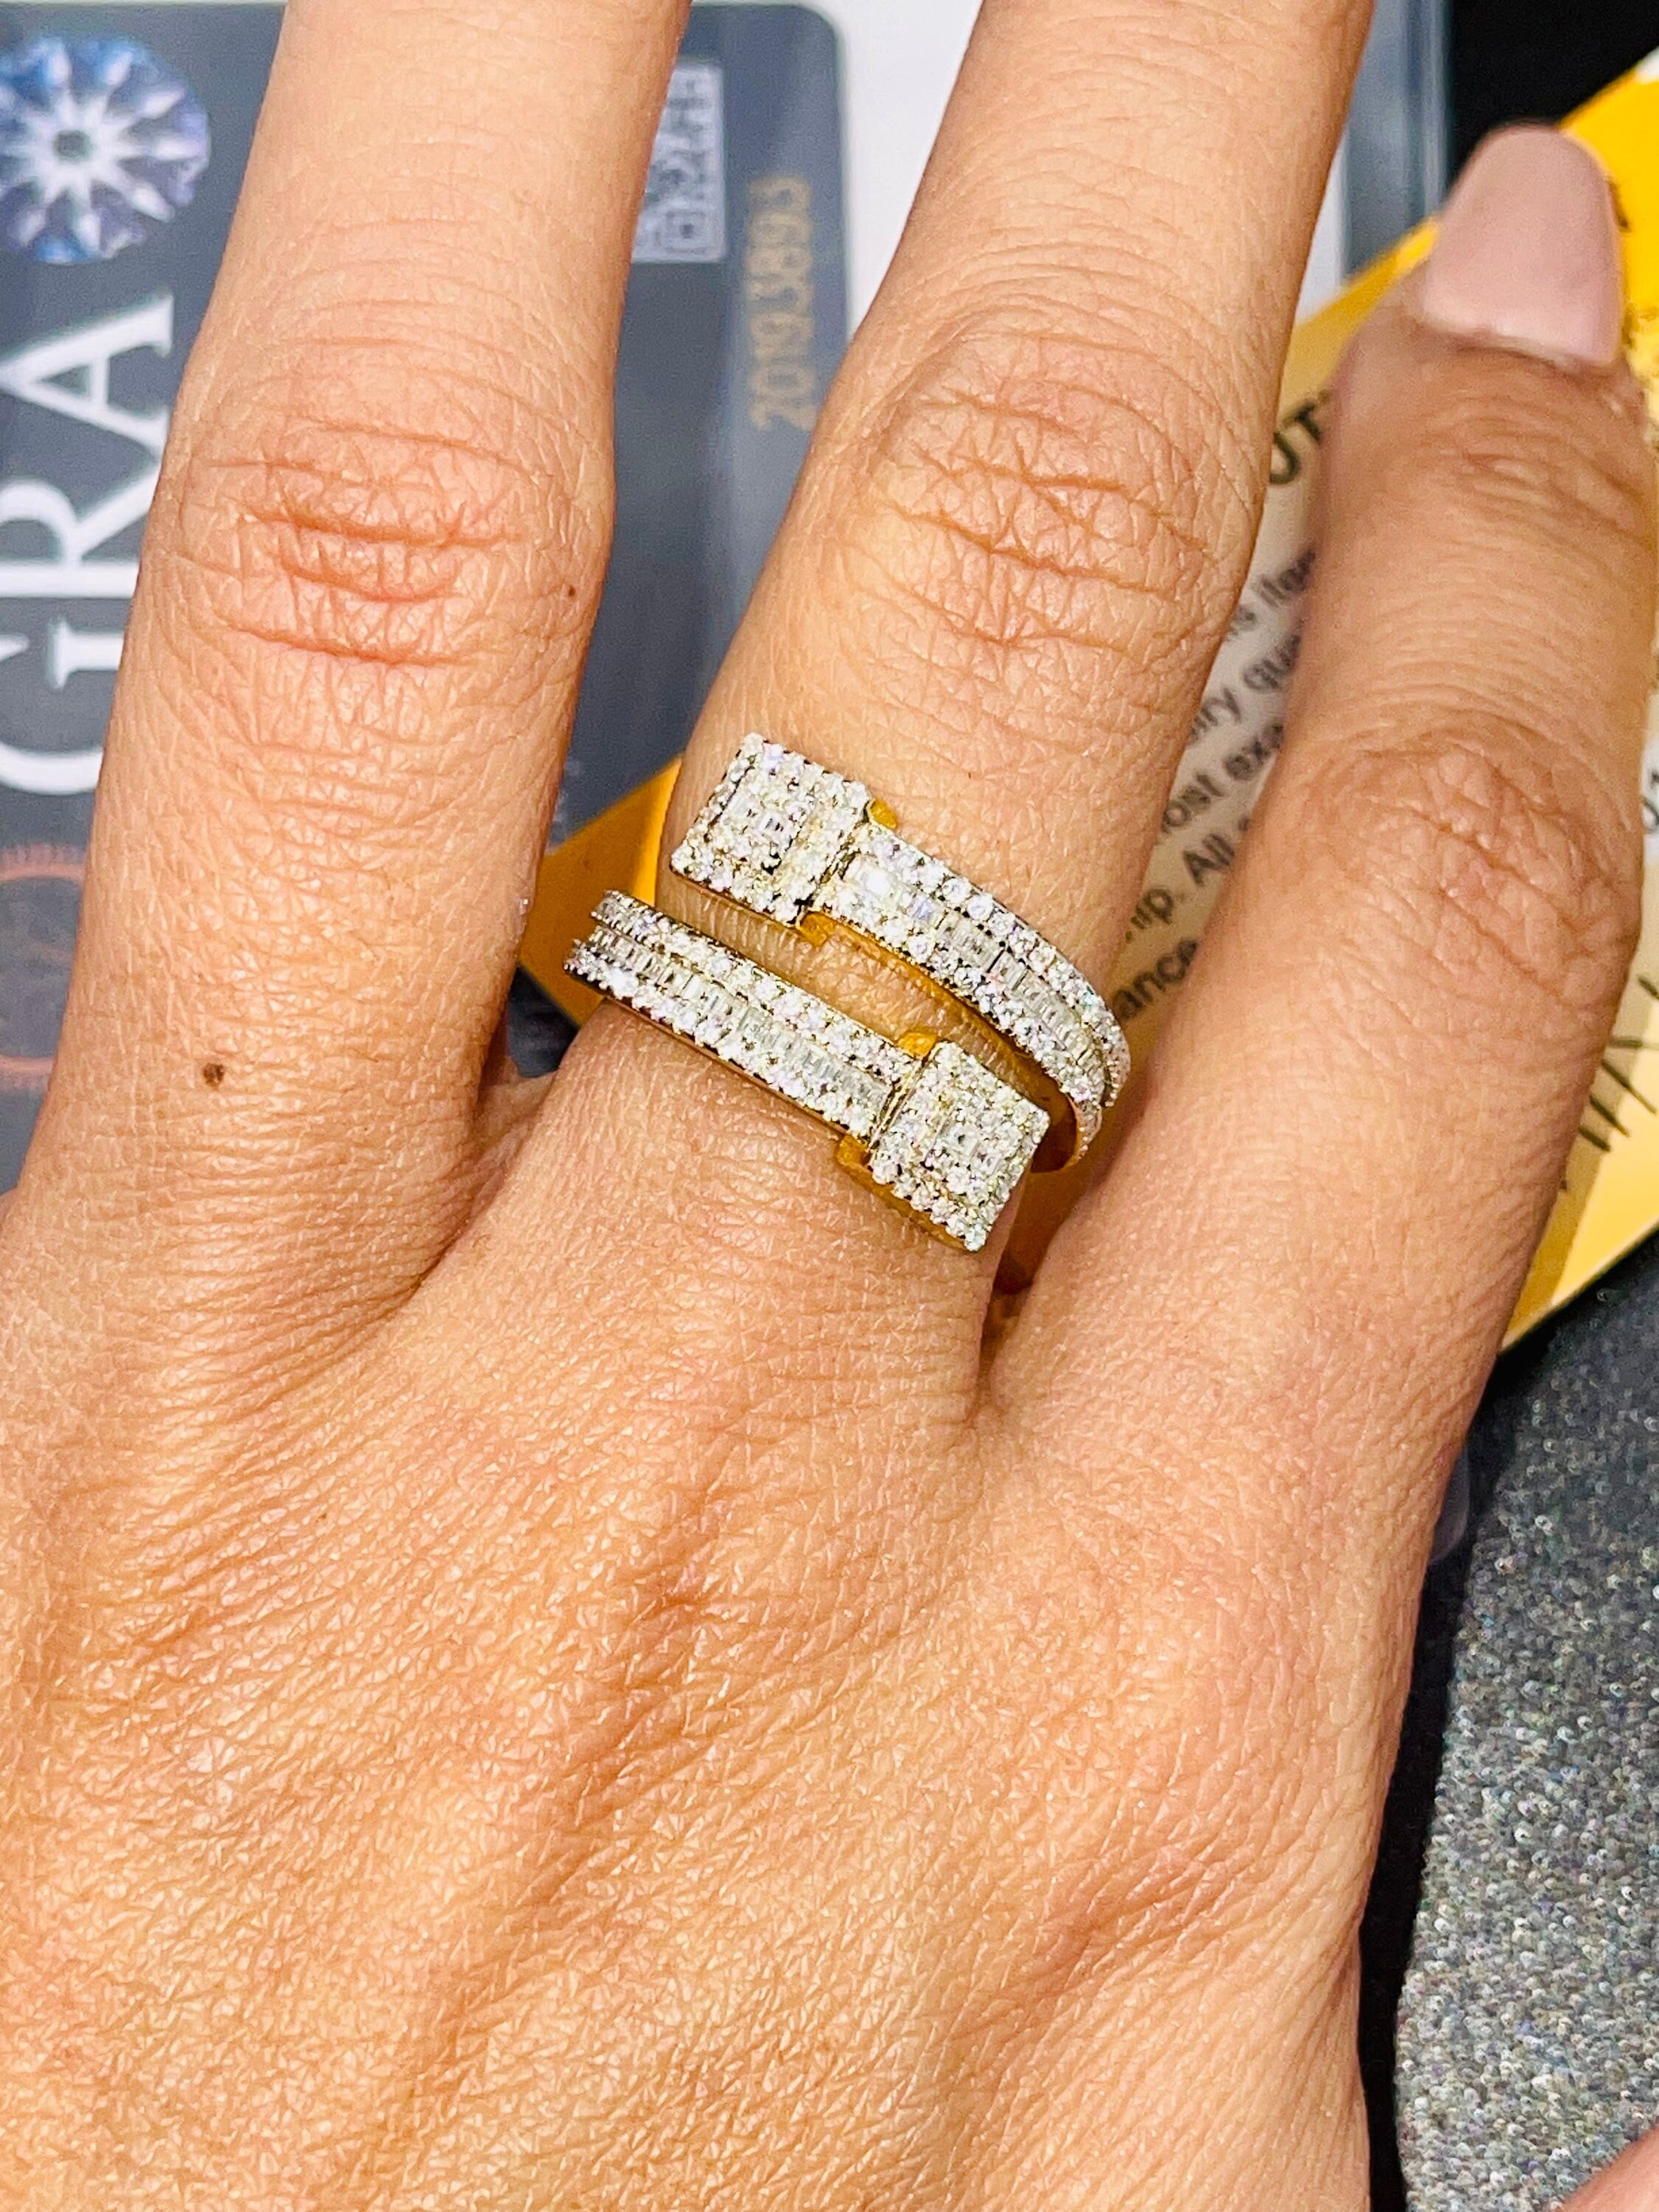 VVS Gra Certified Ladies ring, very popular Ring style, Anniversary gift, 100% passes diamond tester, 14K Gold Vermeil, Diamond Cuff Ring